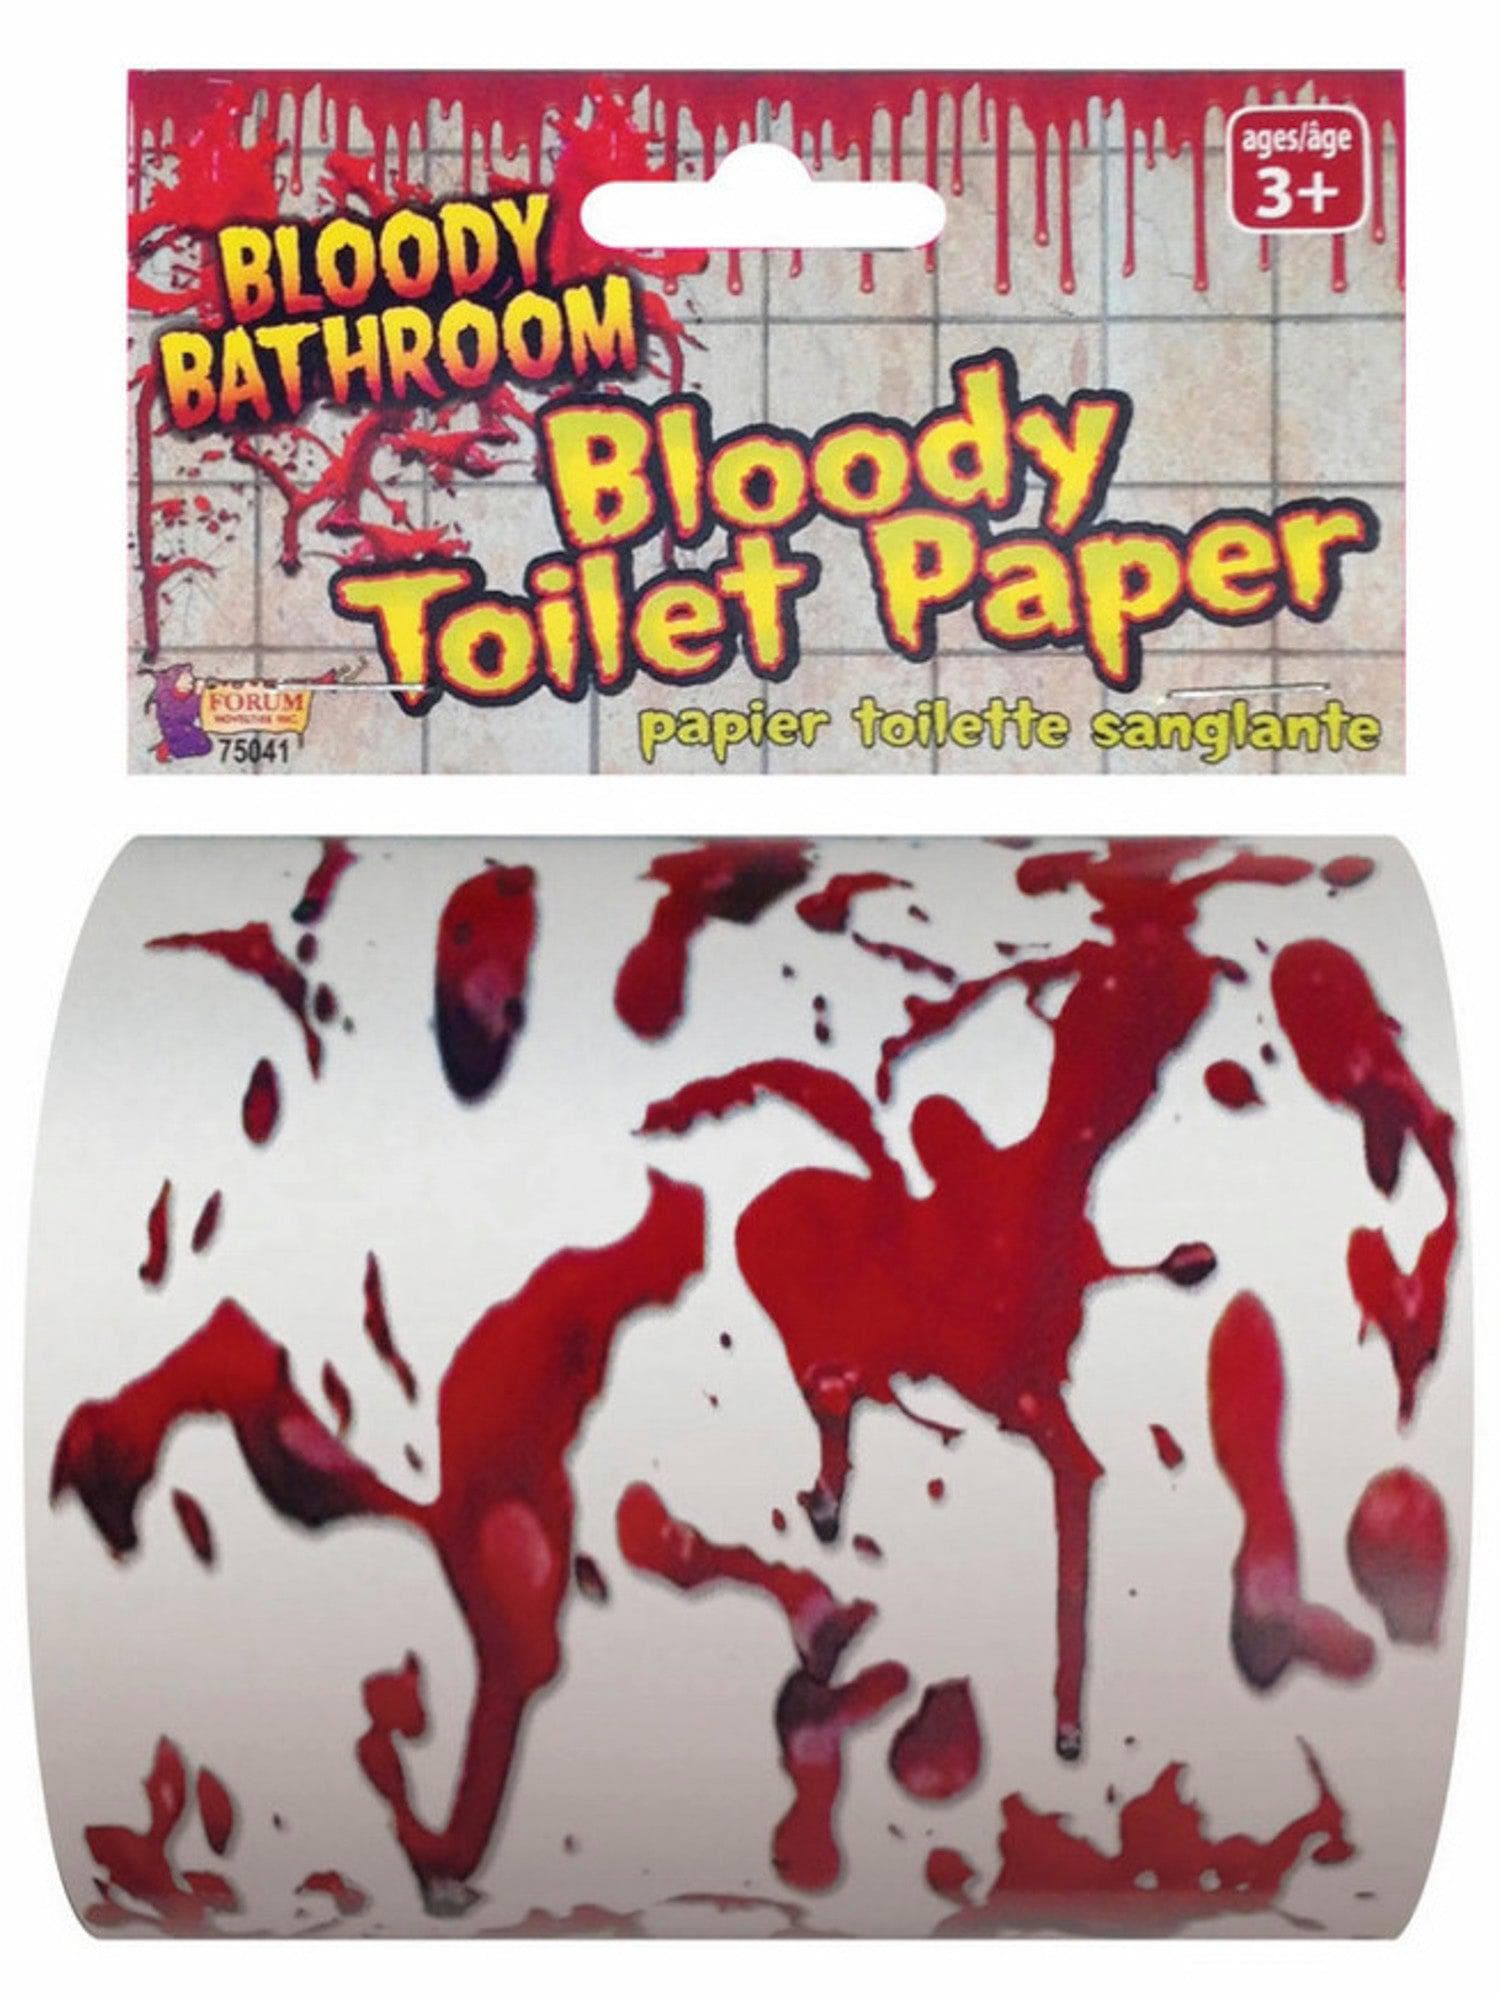 Bloody Bathroom Toilet Paper - costumes.com